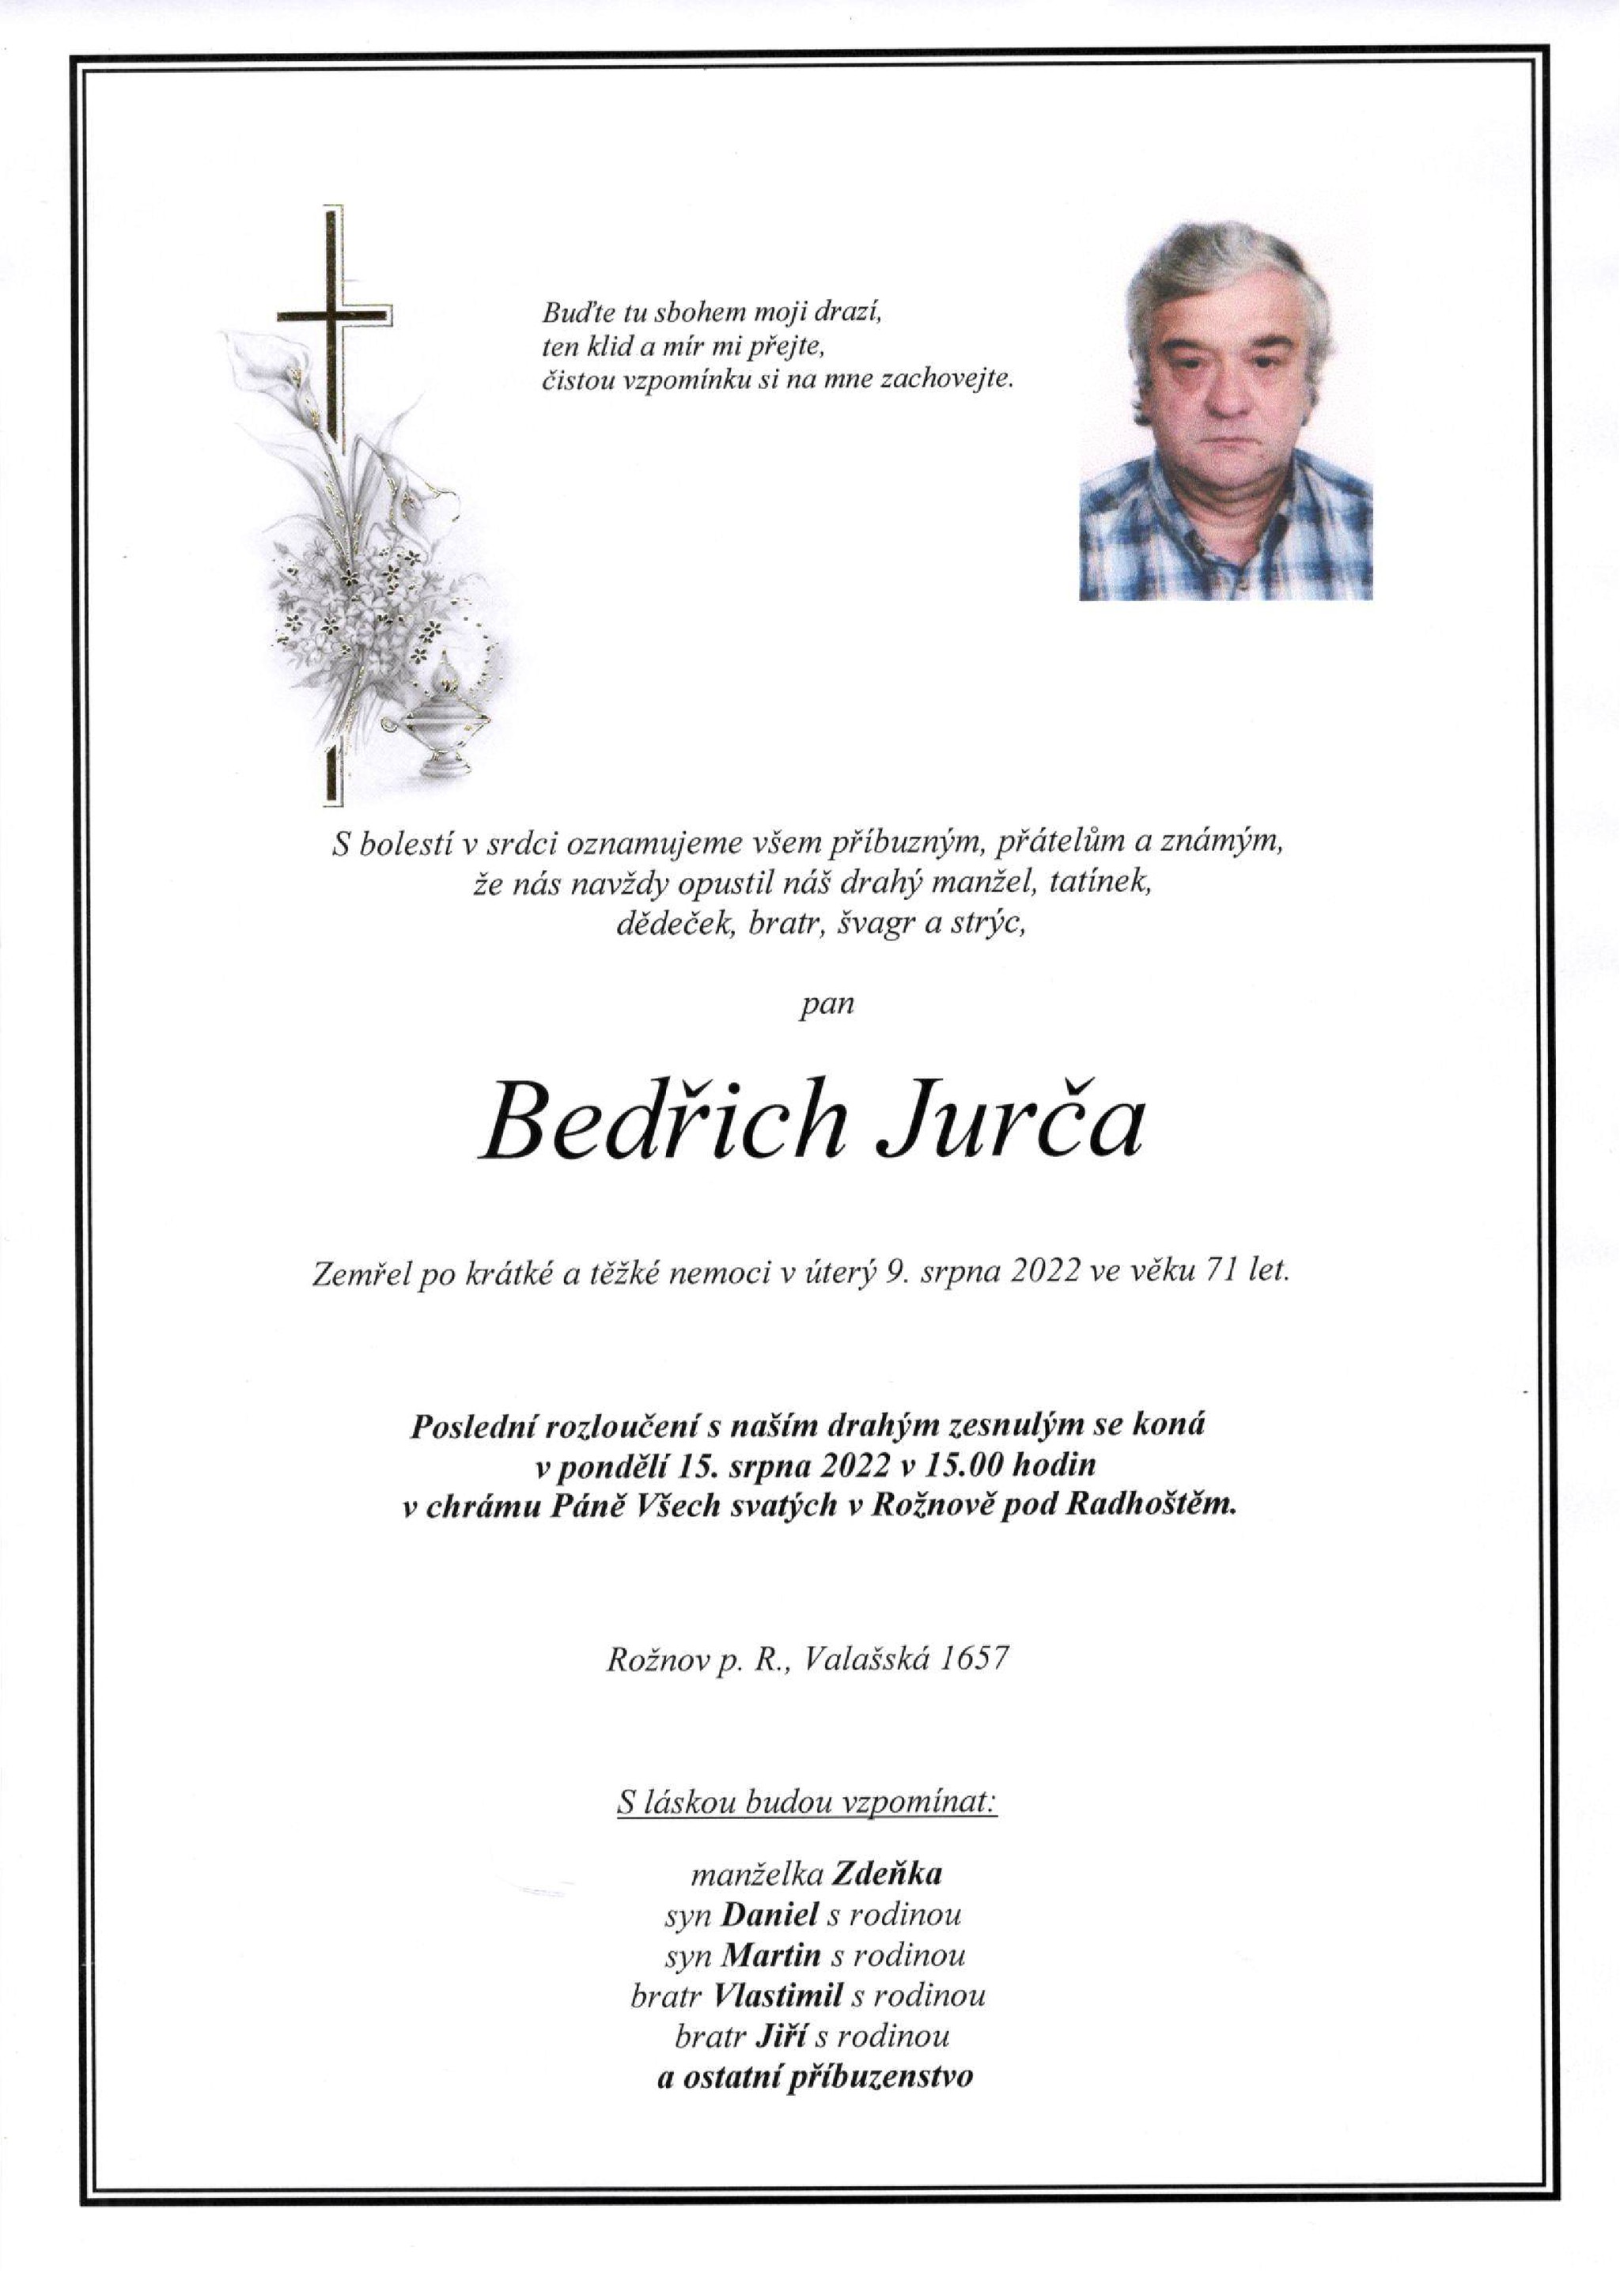 Bedřich Jurča